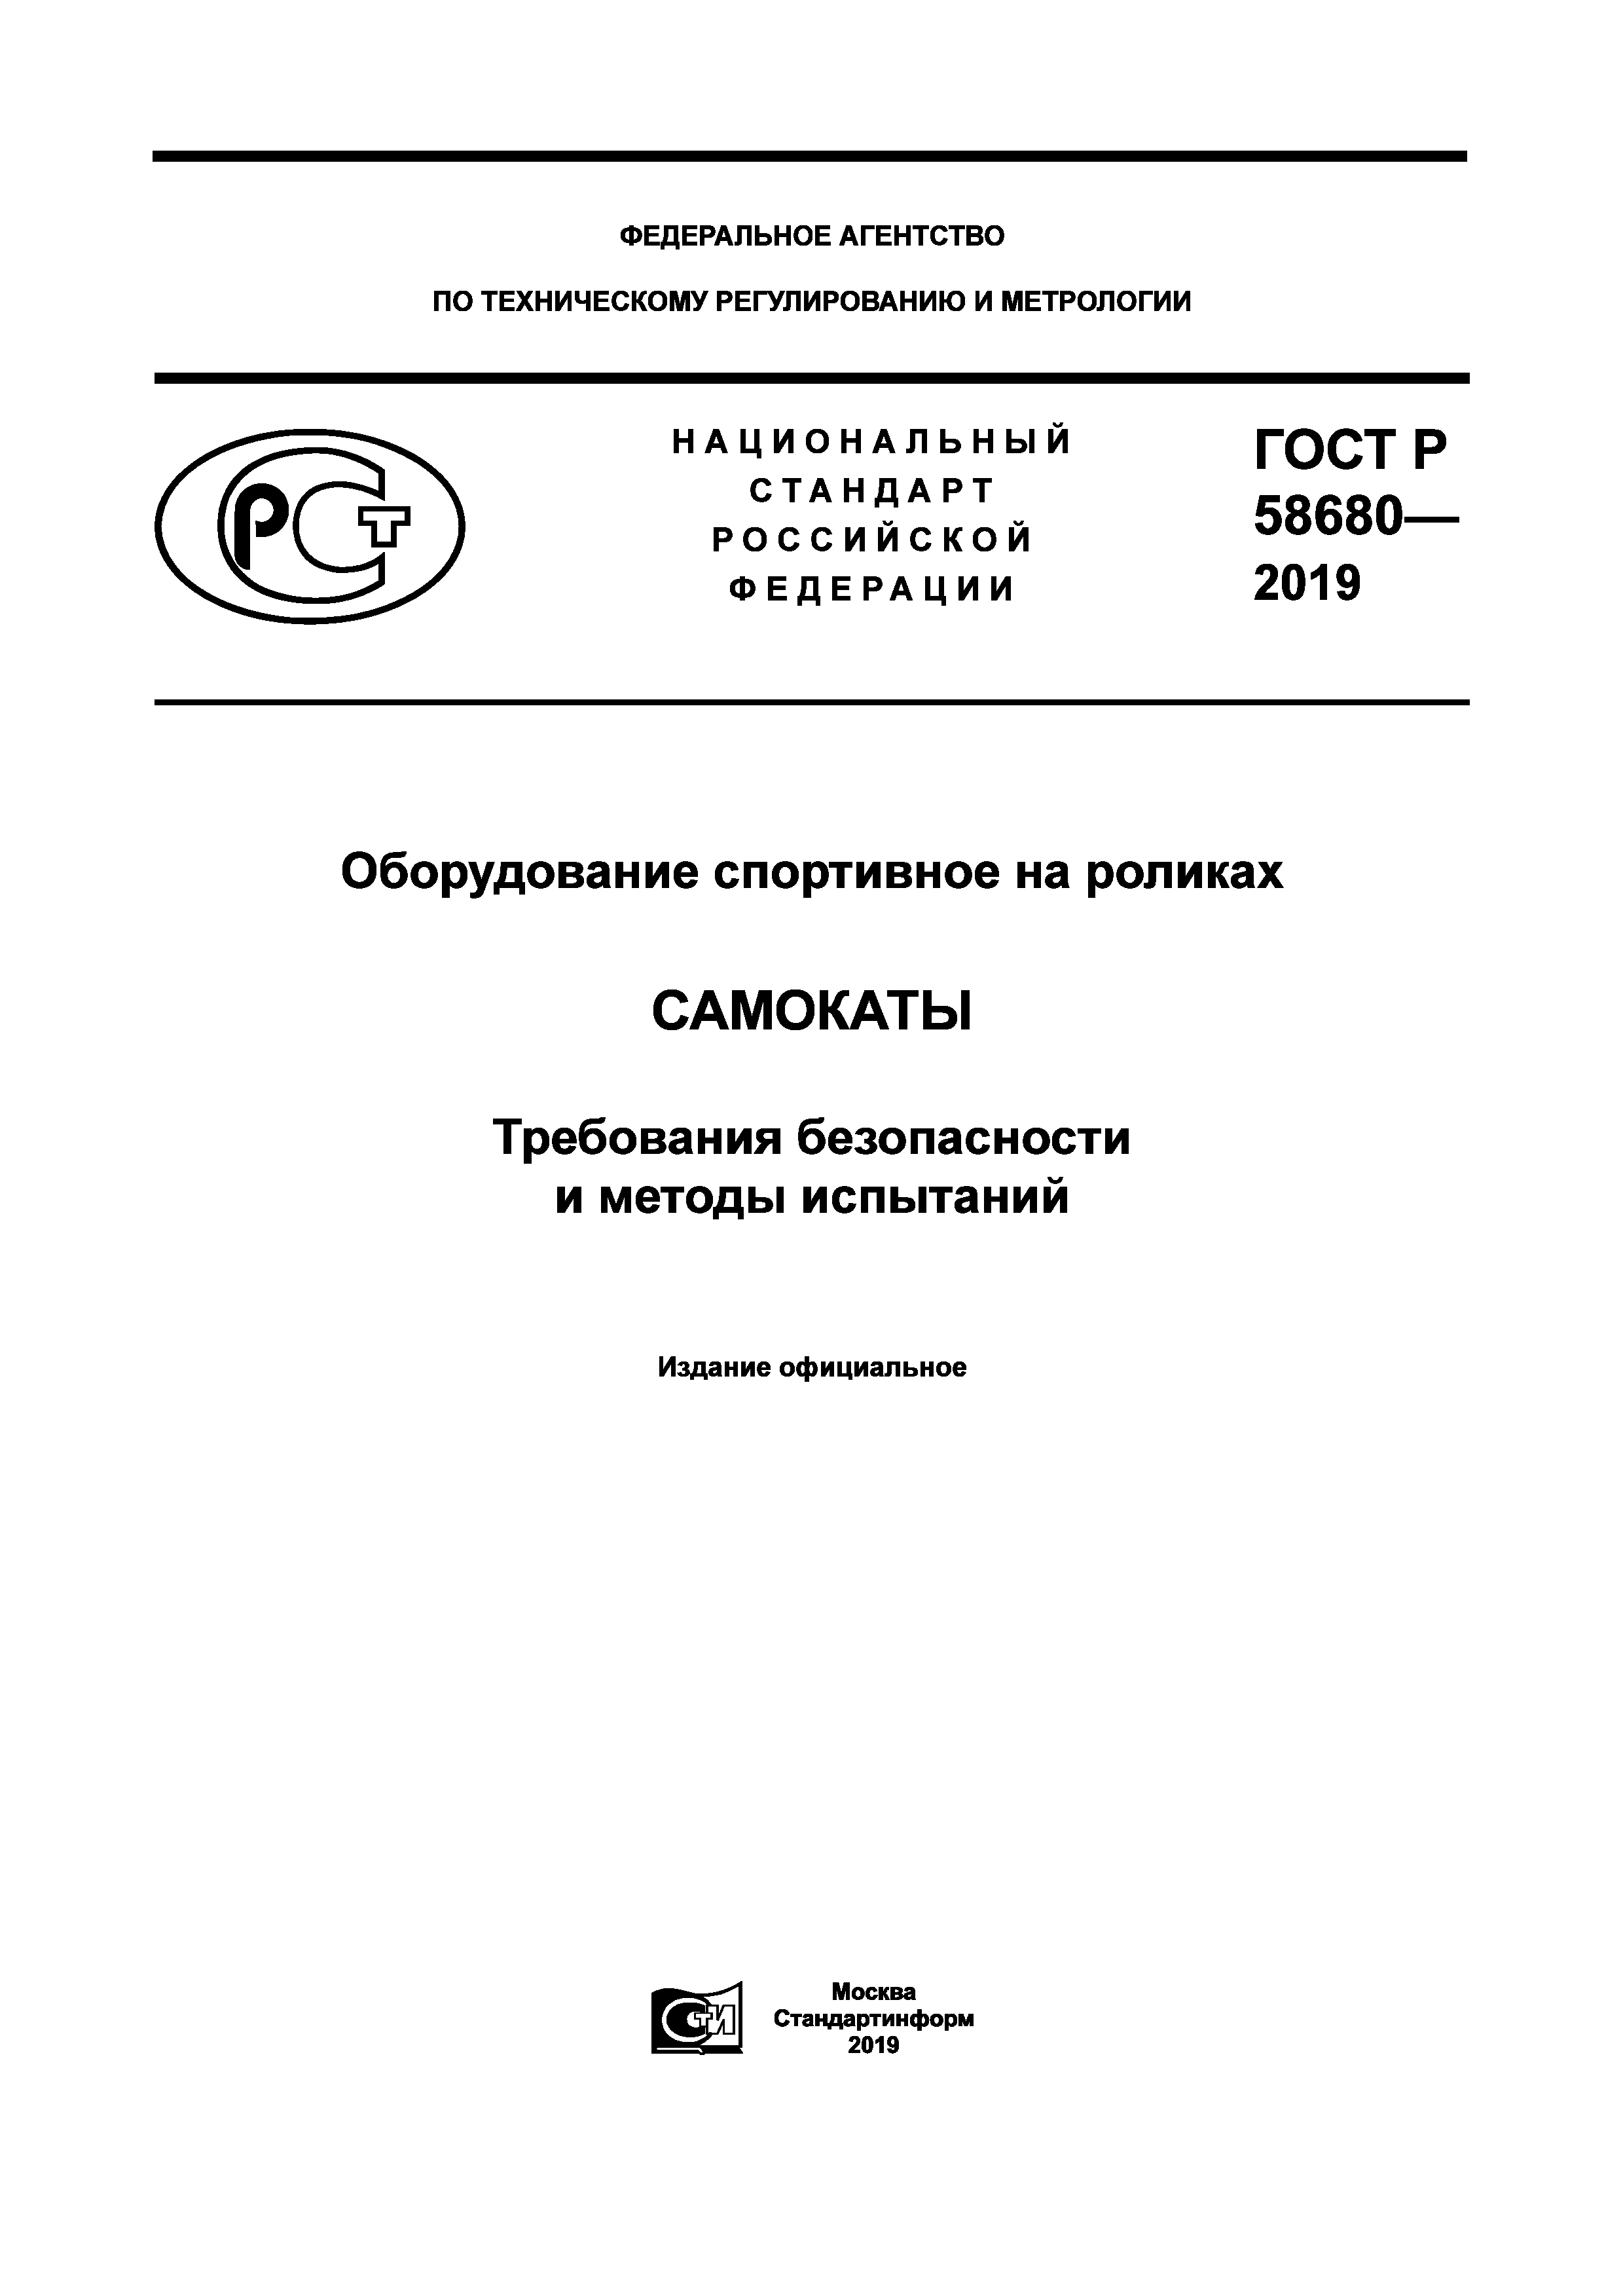 ГОСТ Р 58680-2019